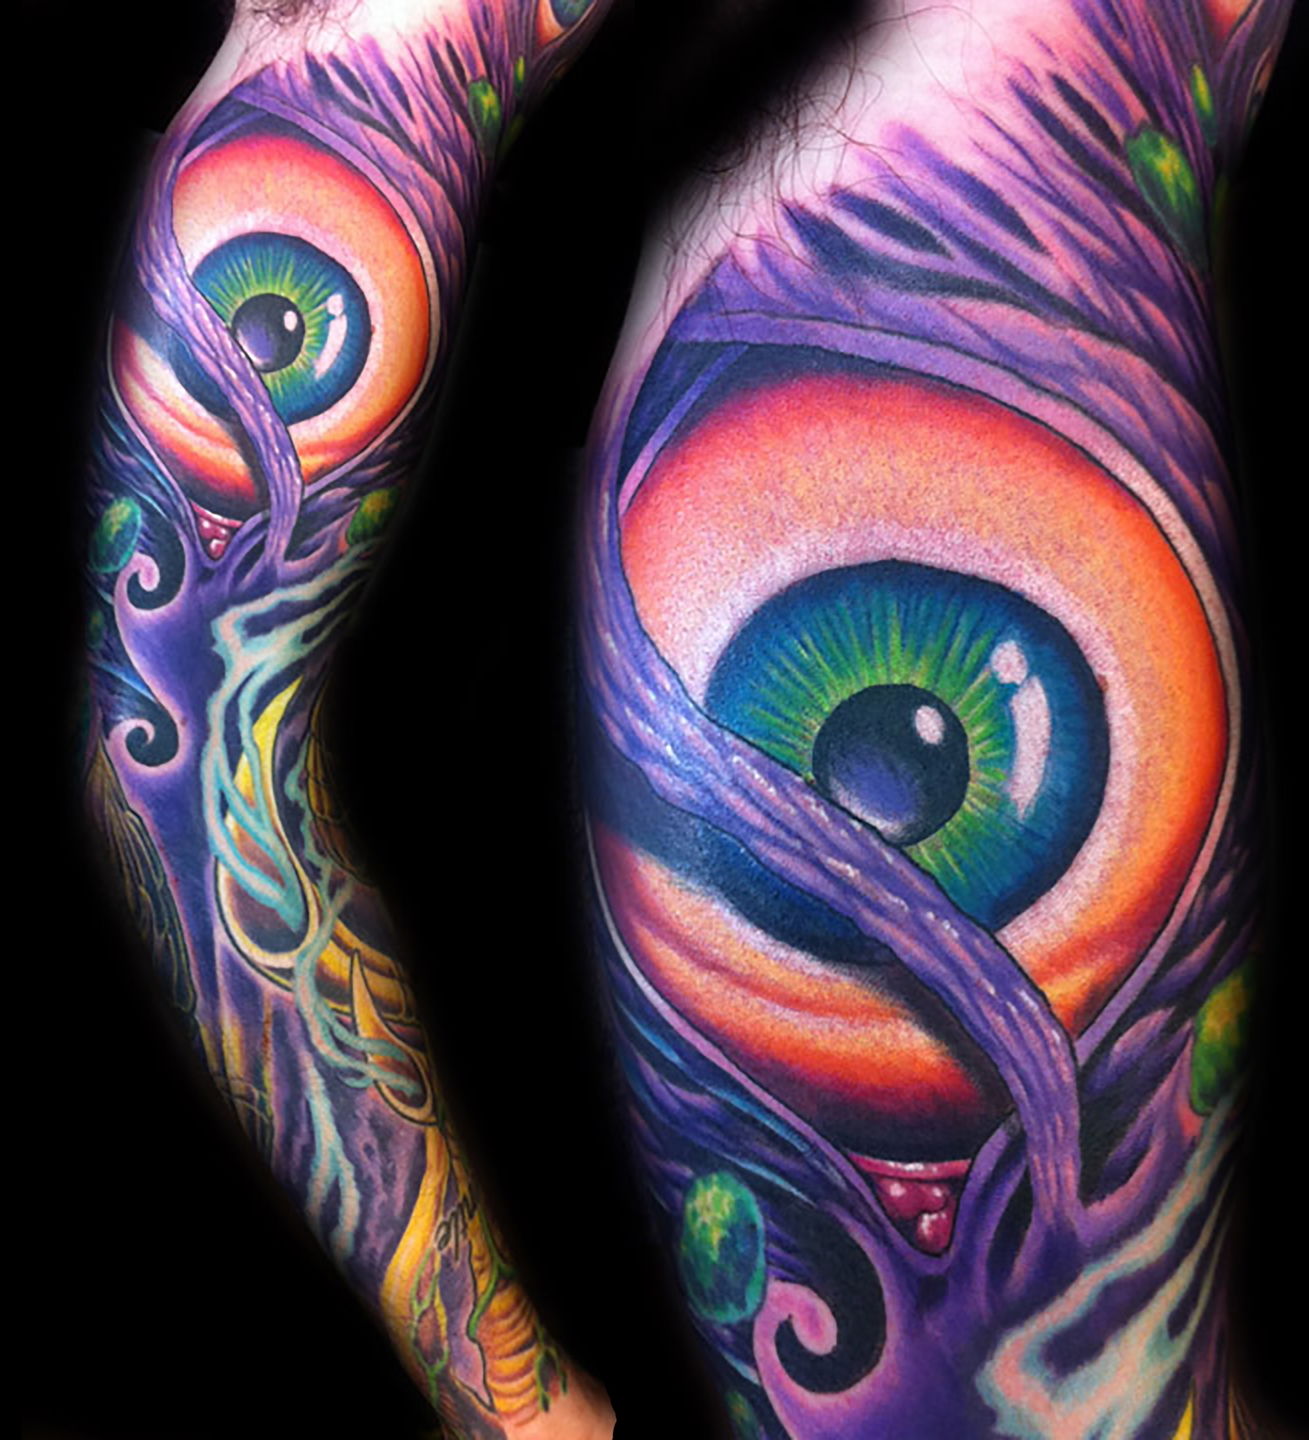 Las-vegas-tattoo-artist_joe-riley_biomech-eyeball-sleeve